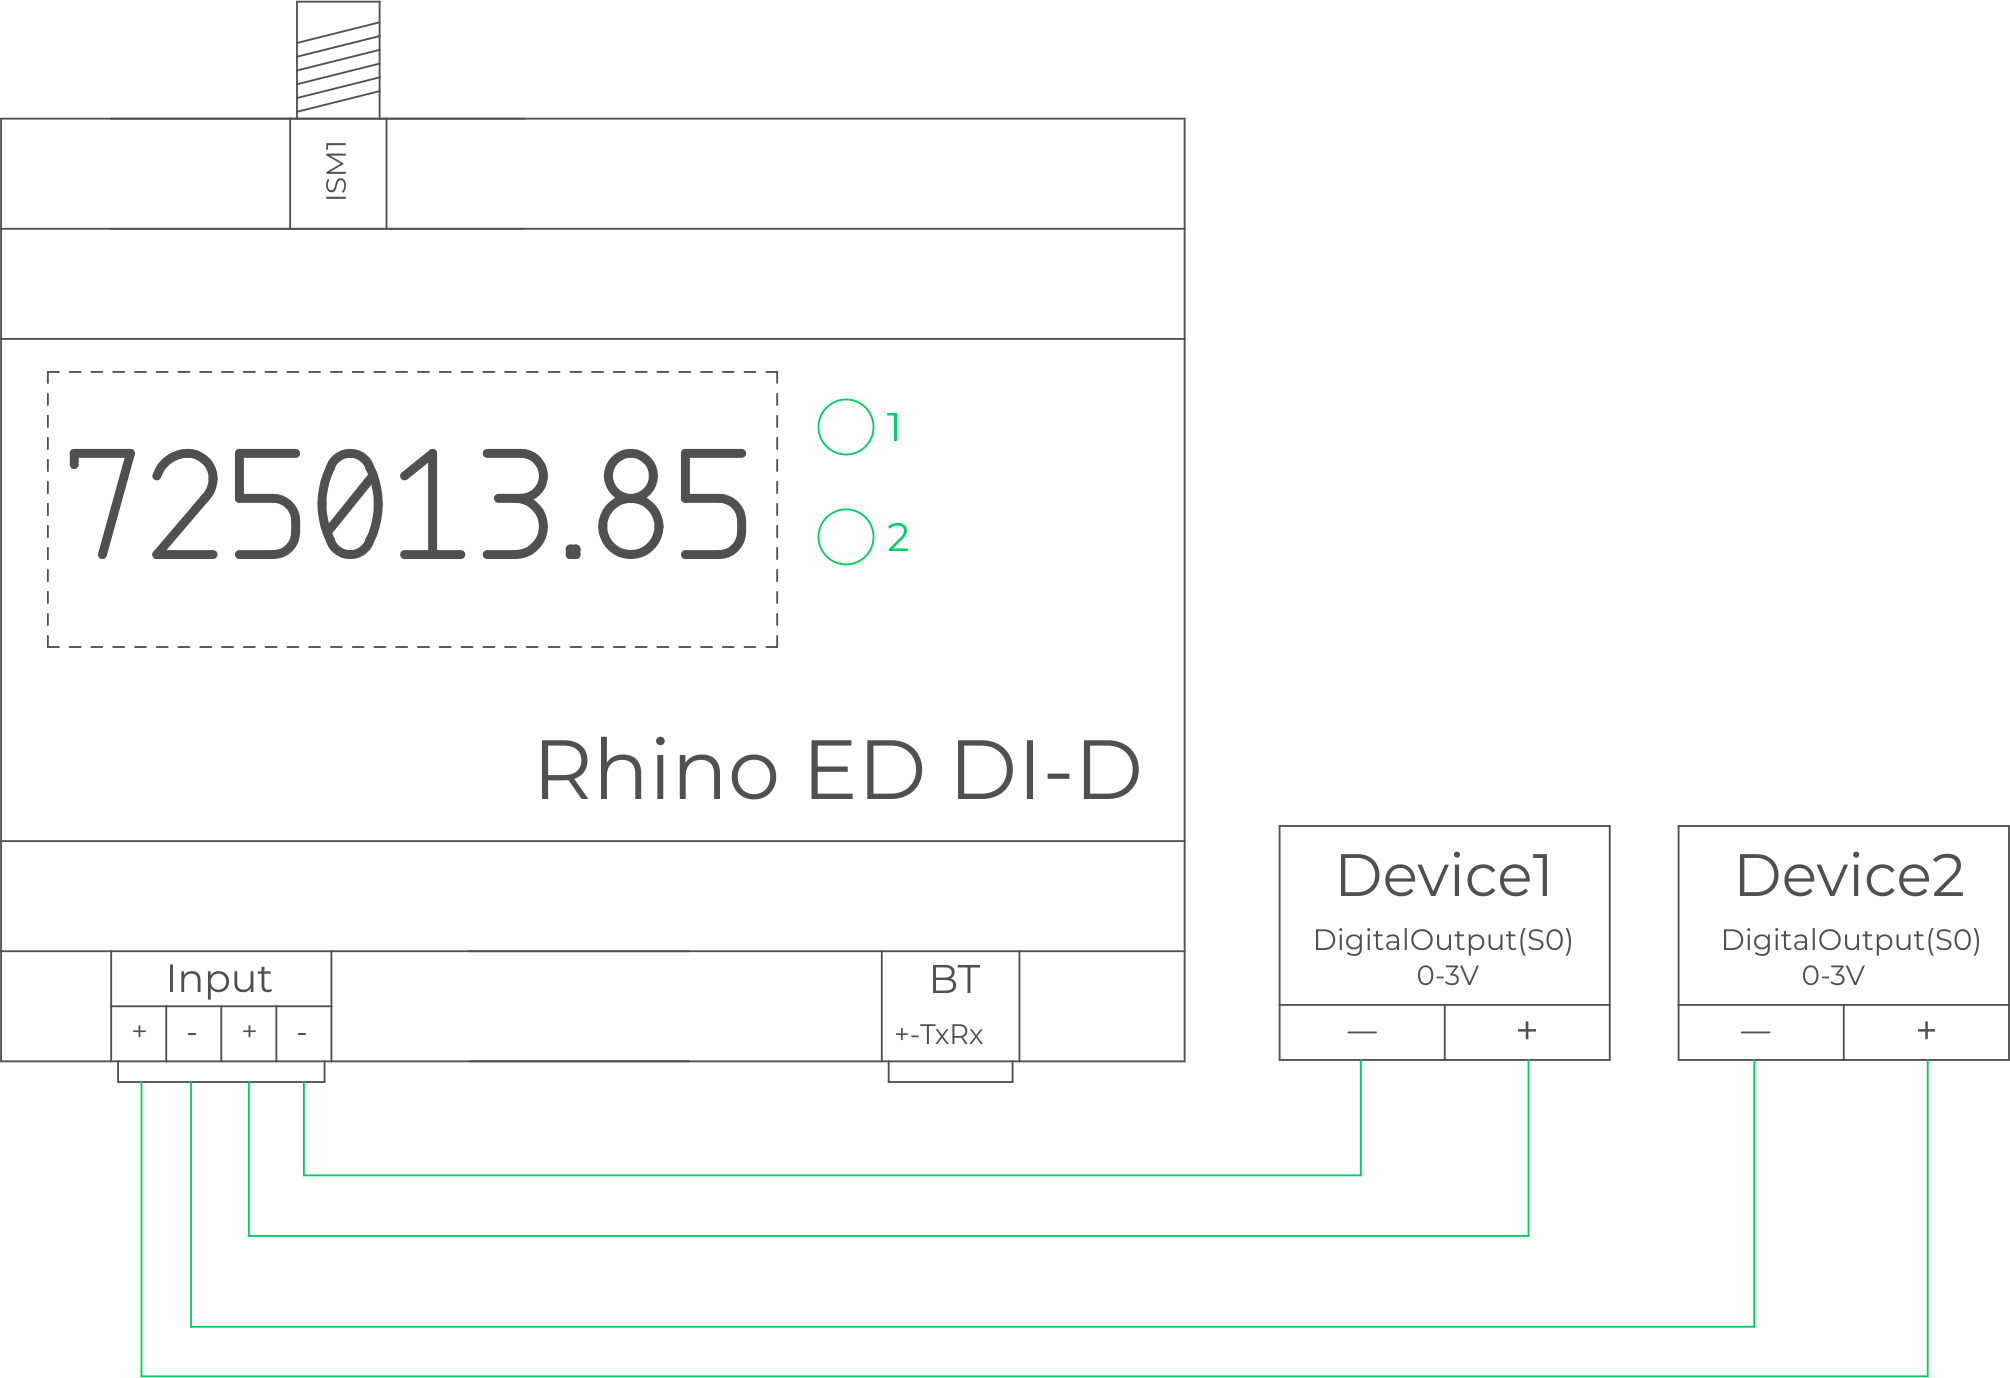 Rhino ED DI-D Schema